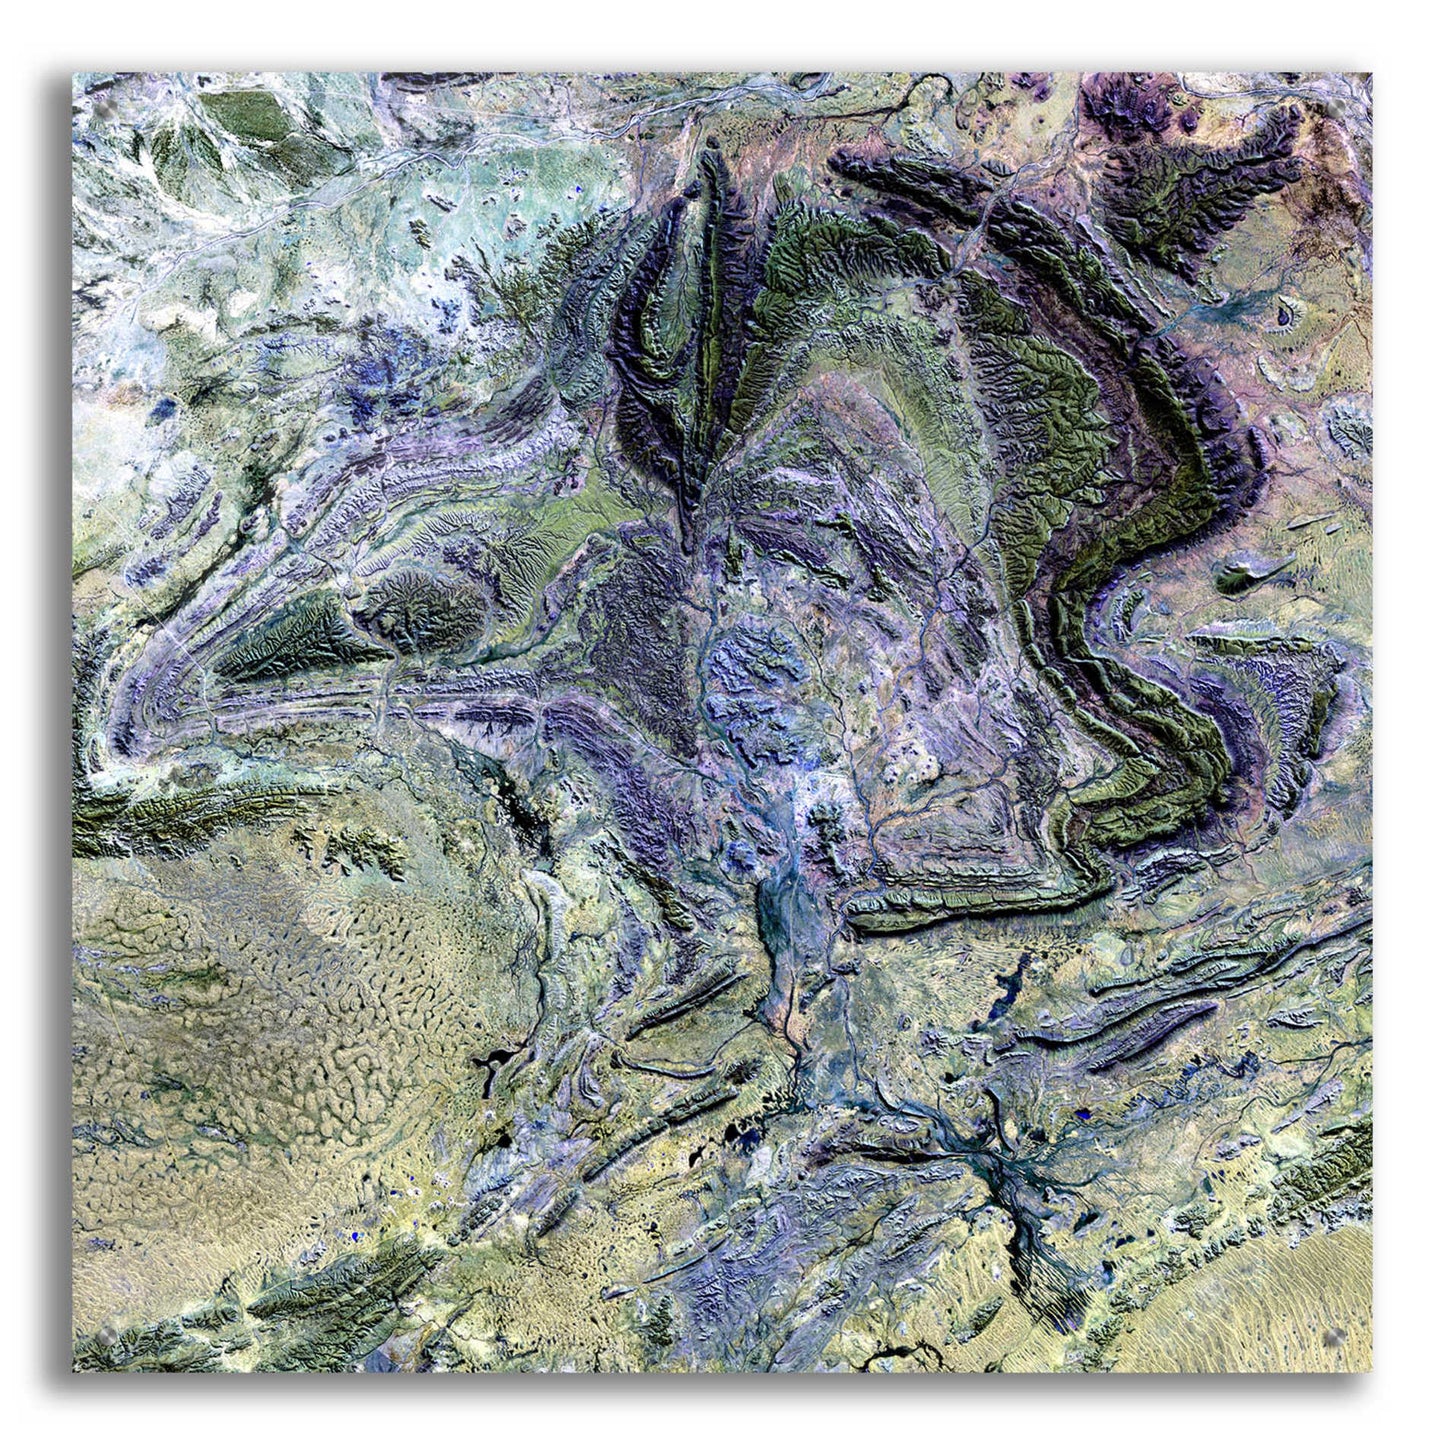 Epic Art 'Earth as Art: MacDonnel Ranges' Acrylic Glass Wall Art,36x36